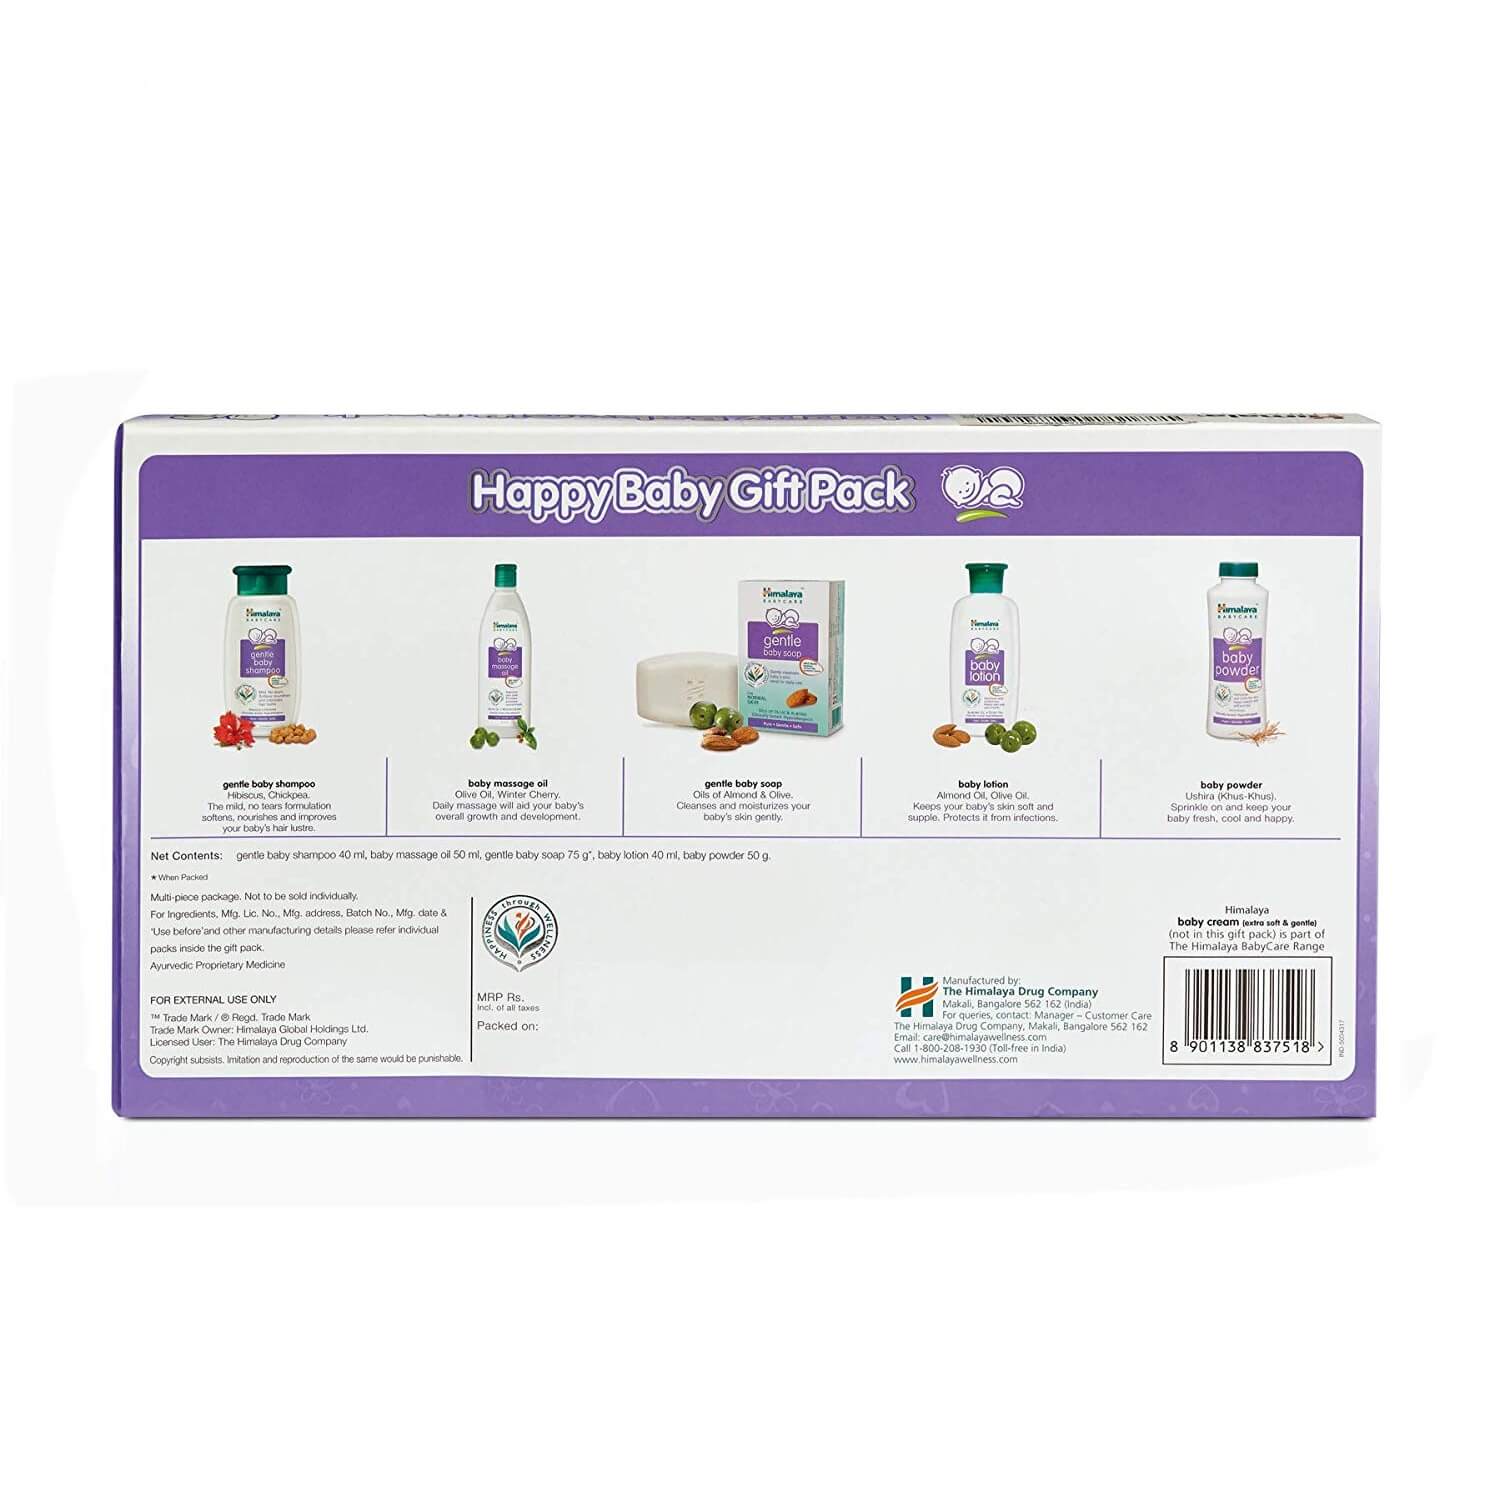 Himalaya Gift Pack & Himalaya Baby Lotion (400ml) : Amazon.in: Baby Products